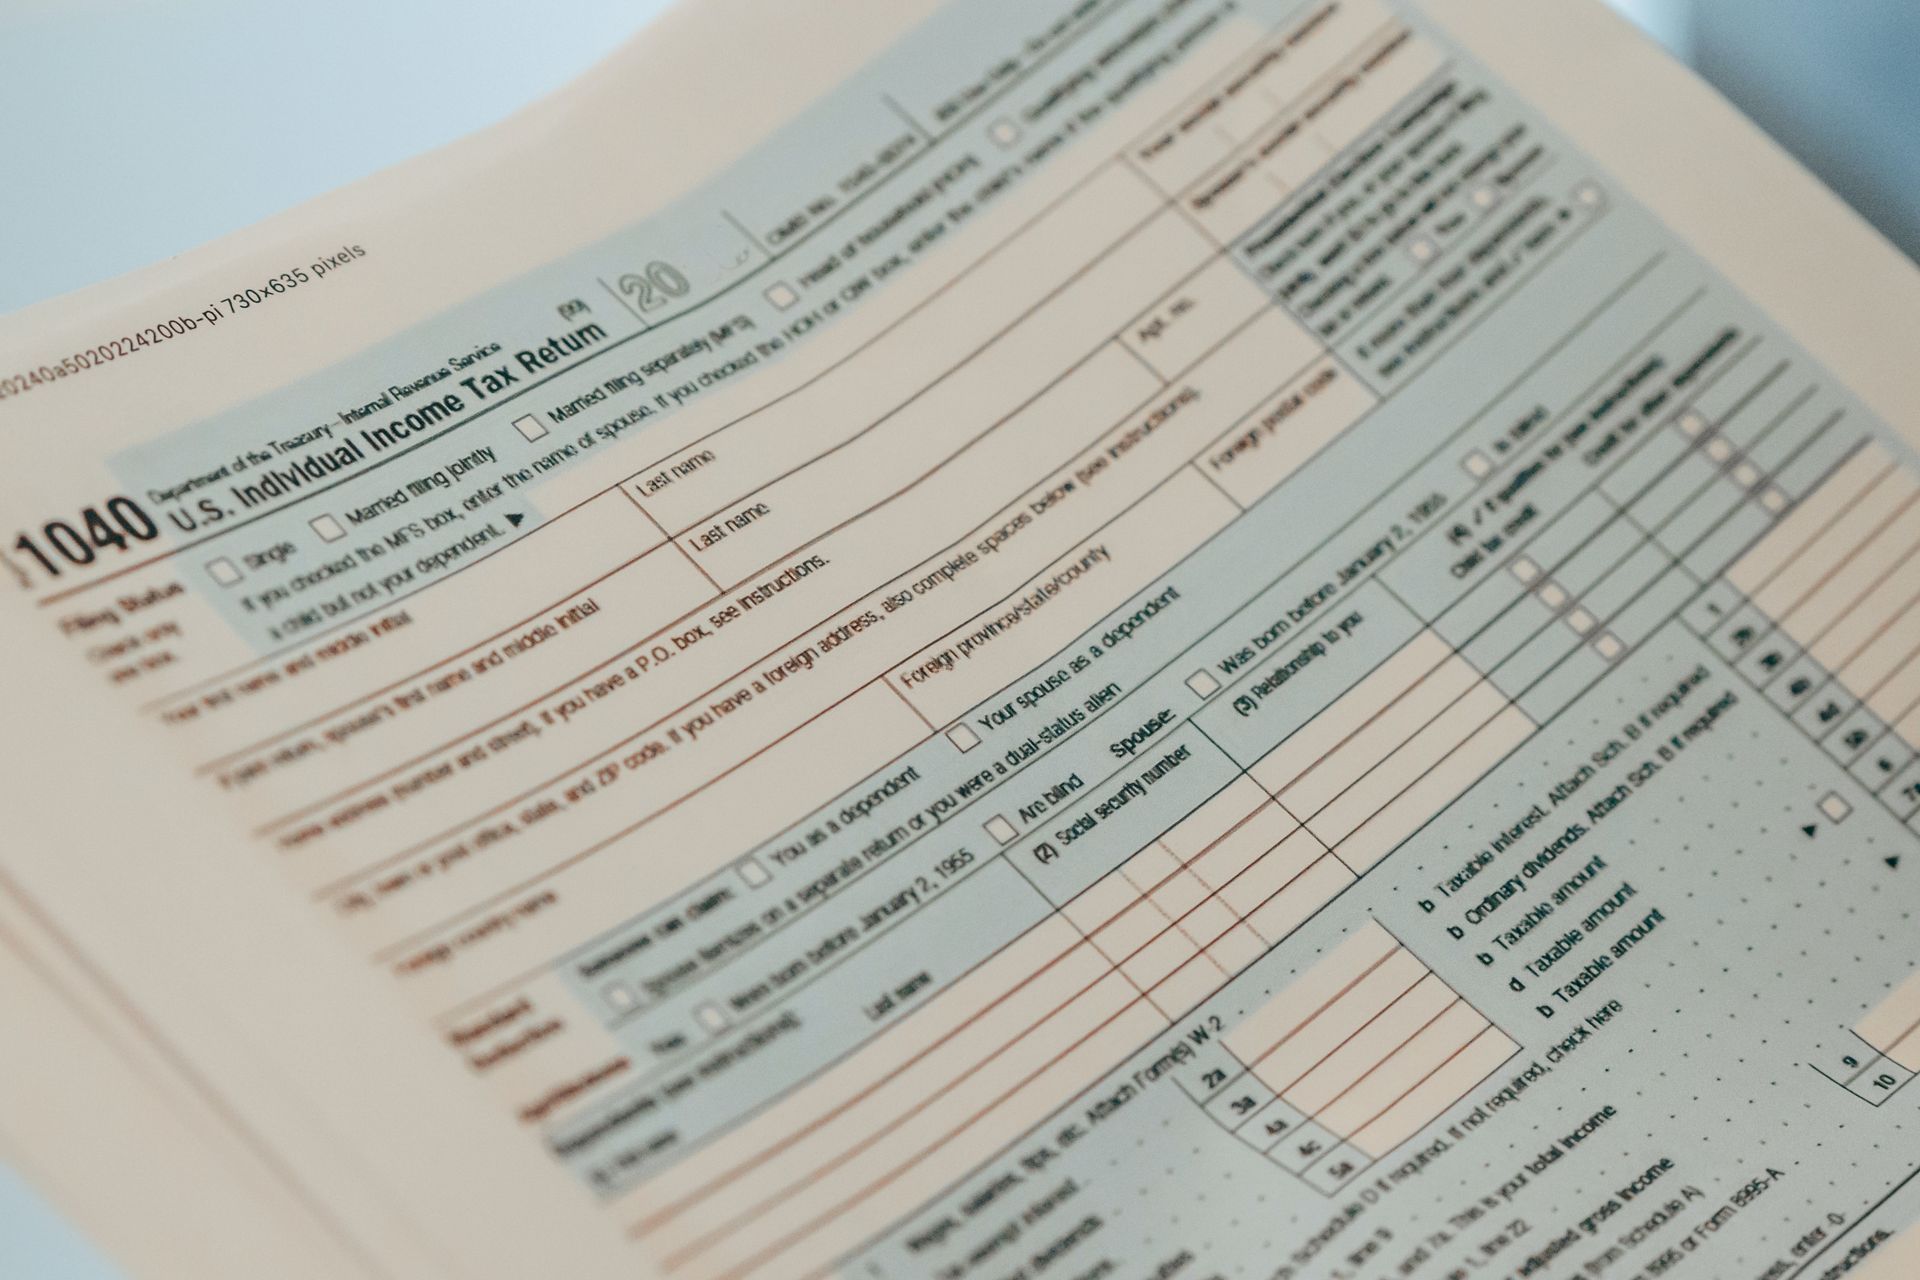 A close up of a 1040 tax form